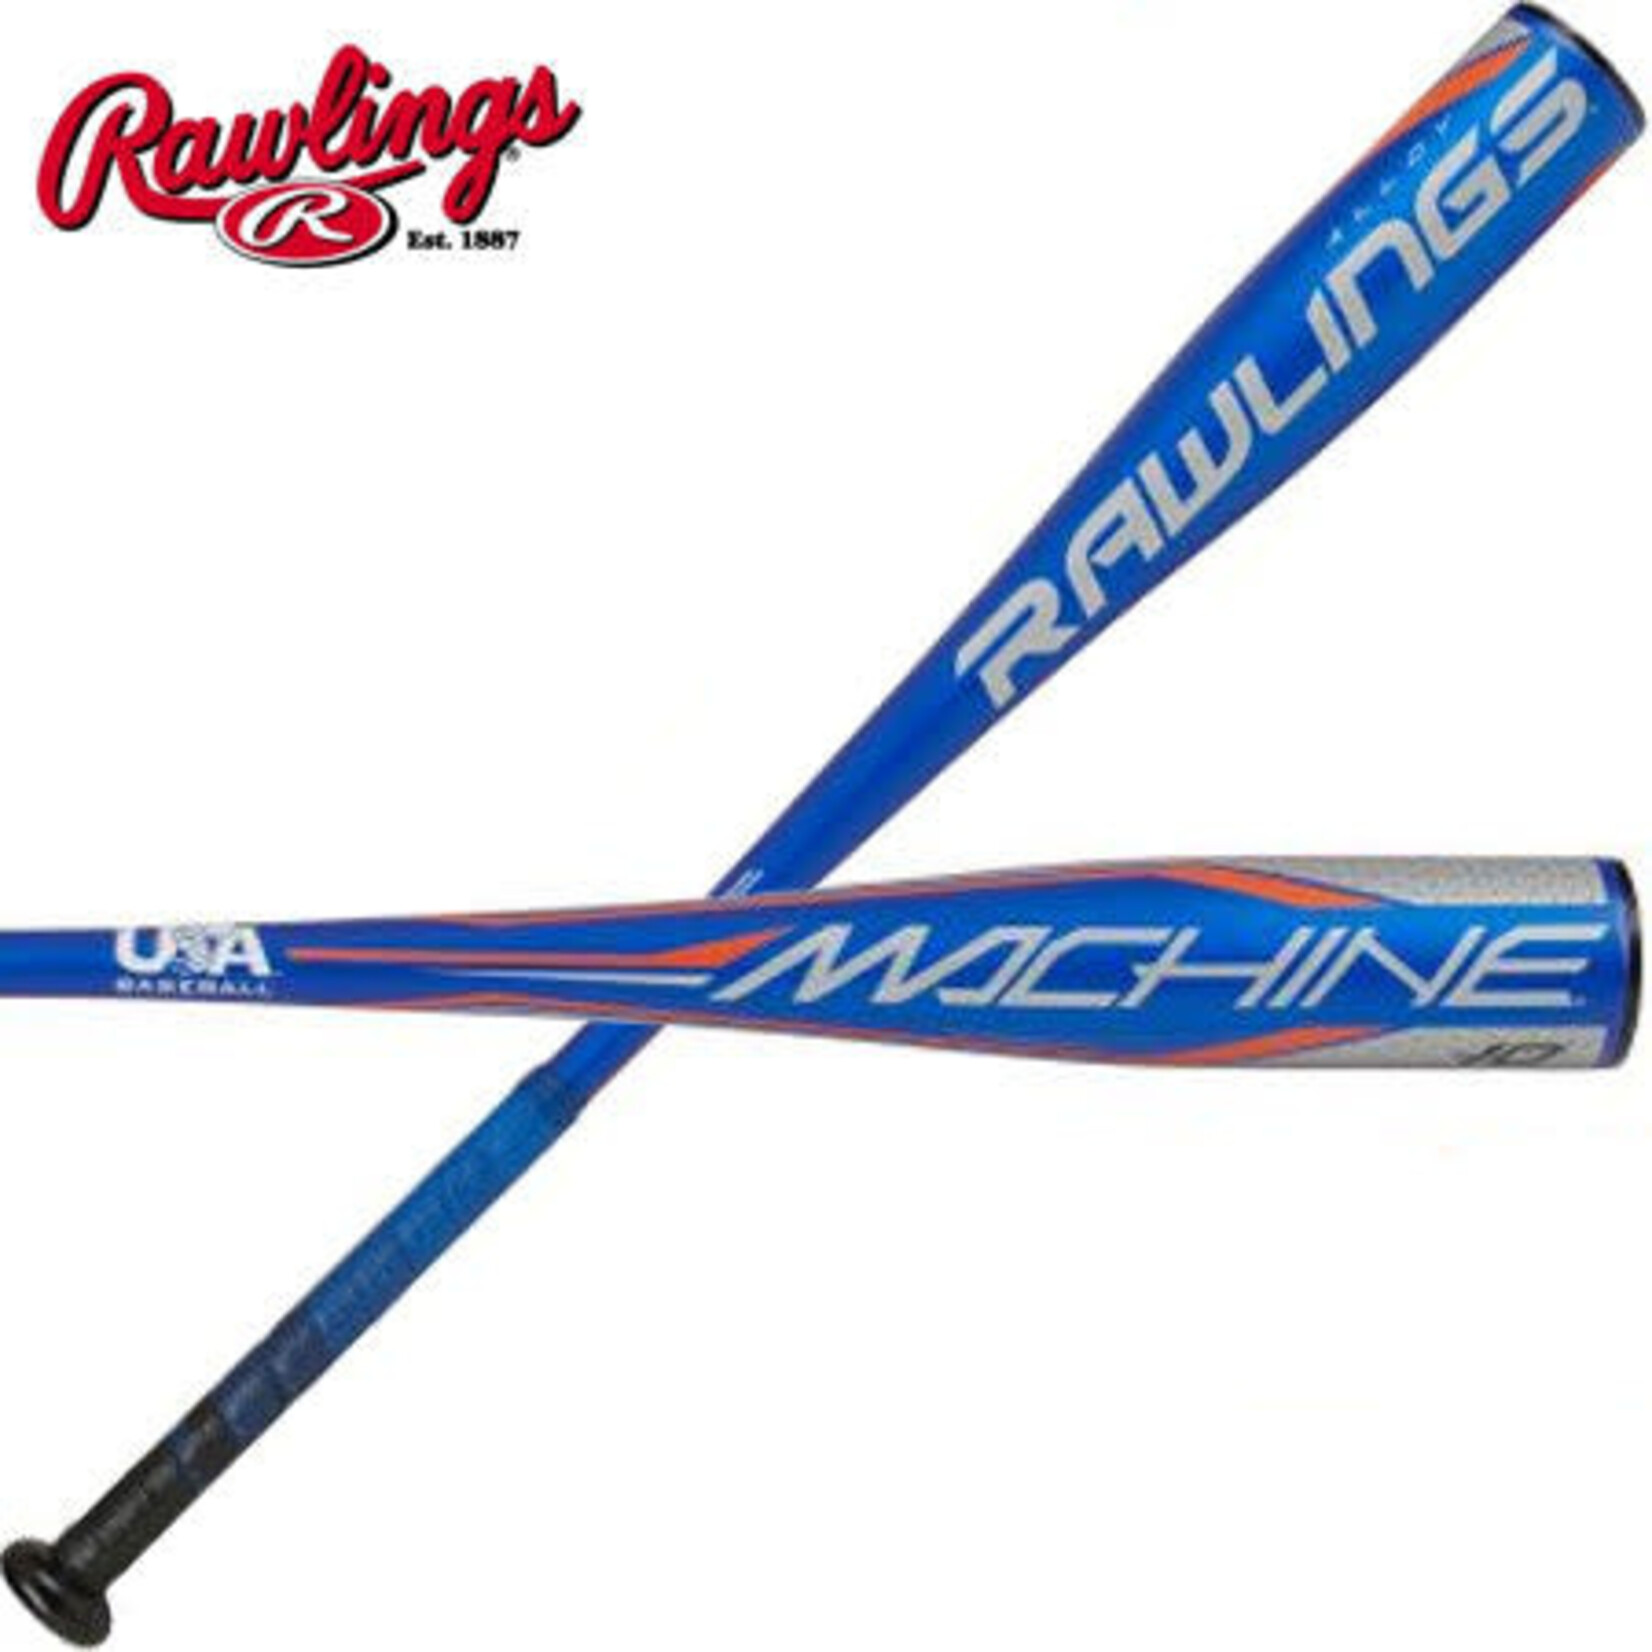 Rawlings Rawlings Baseball Bat, Machine, US1M10, 2 5/8”, -10